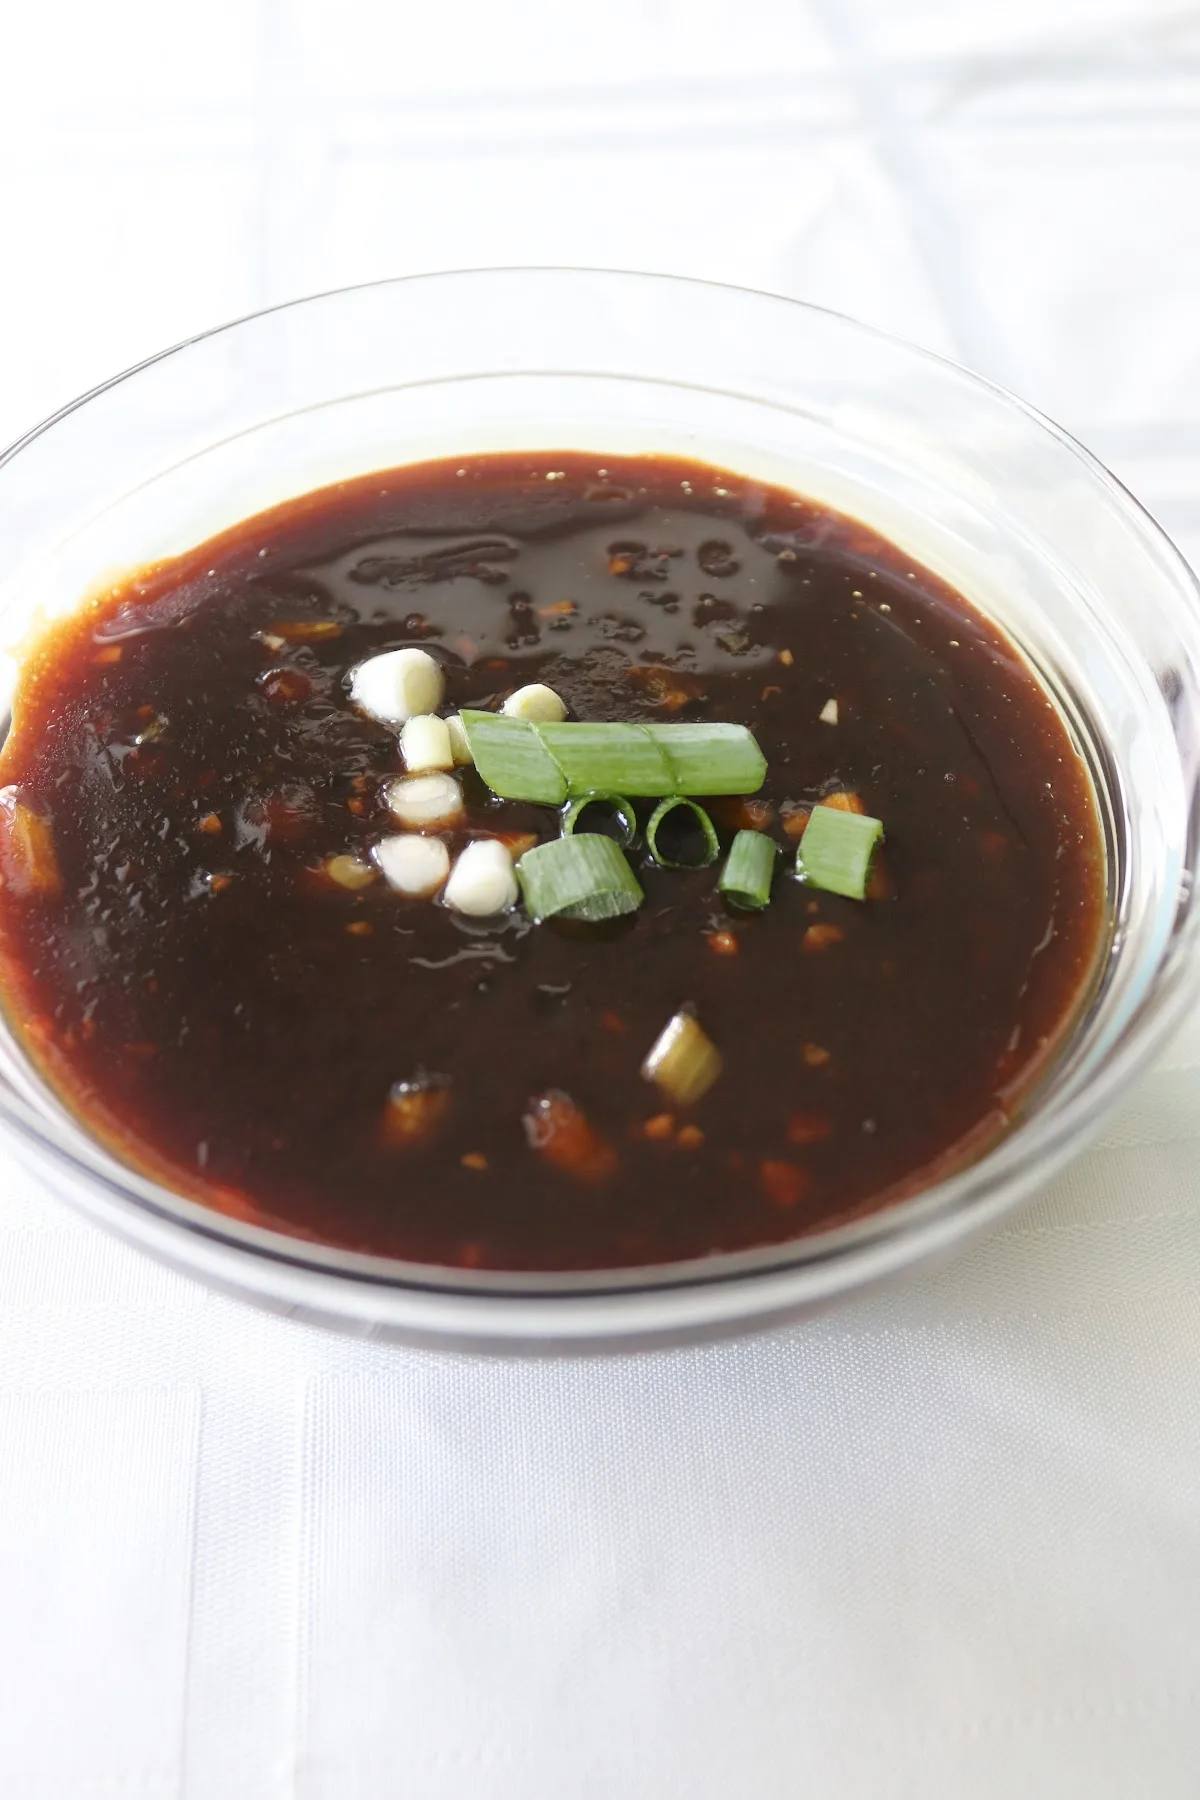 Homemade teriyaki sauce in a clear bowl on a white tablecloth.